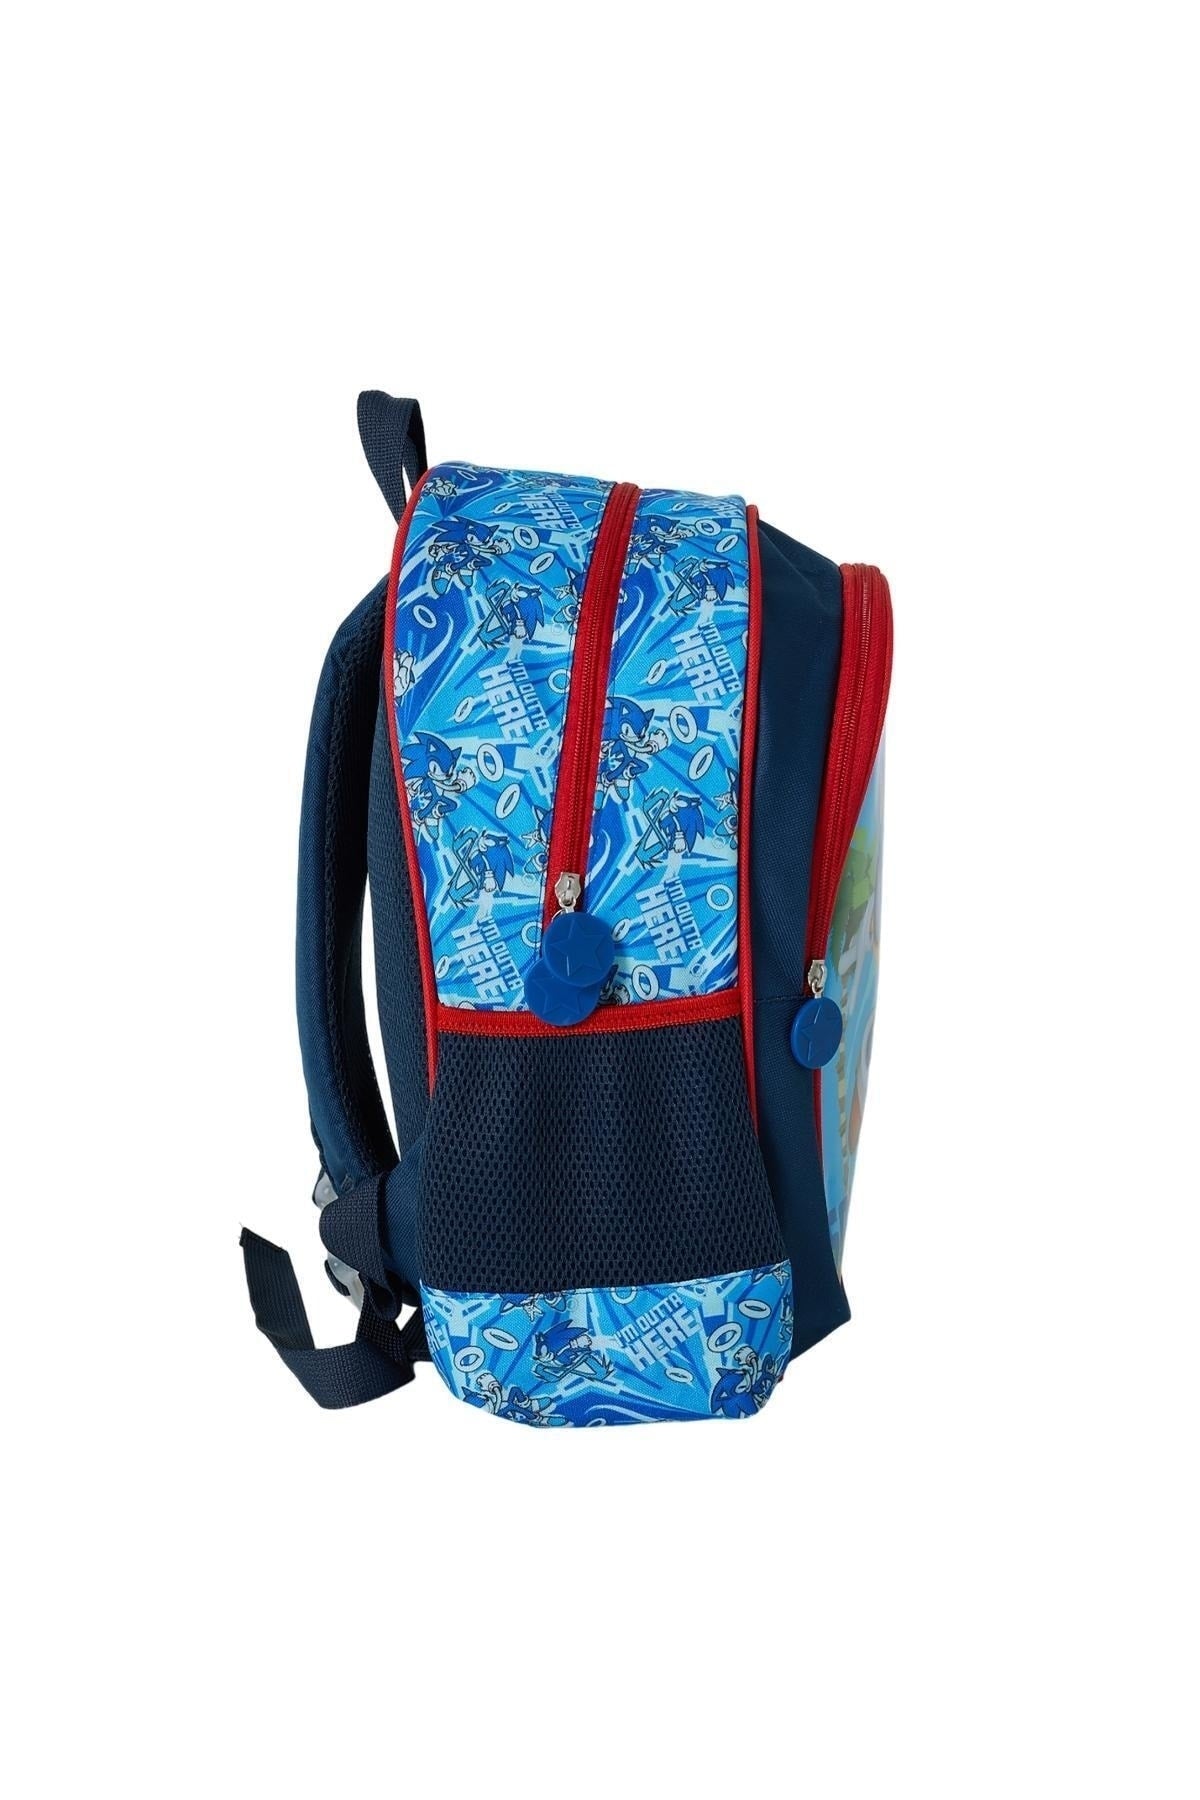 Wiggle Sonic The Hedgehog Oversized School Kids Backpack